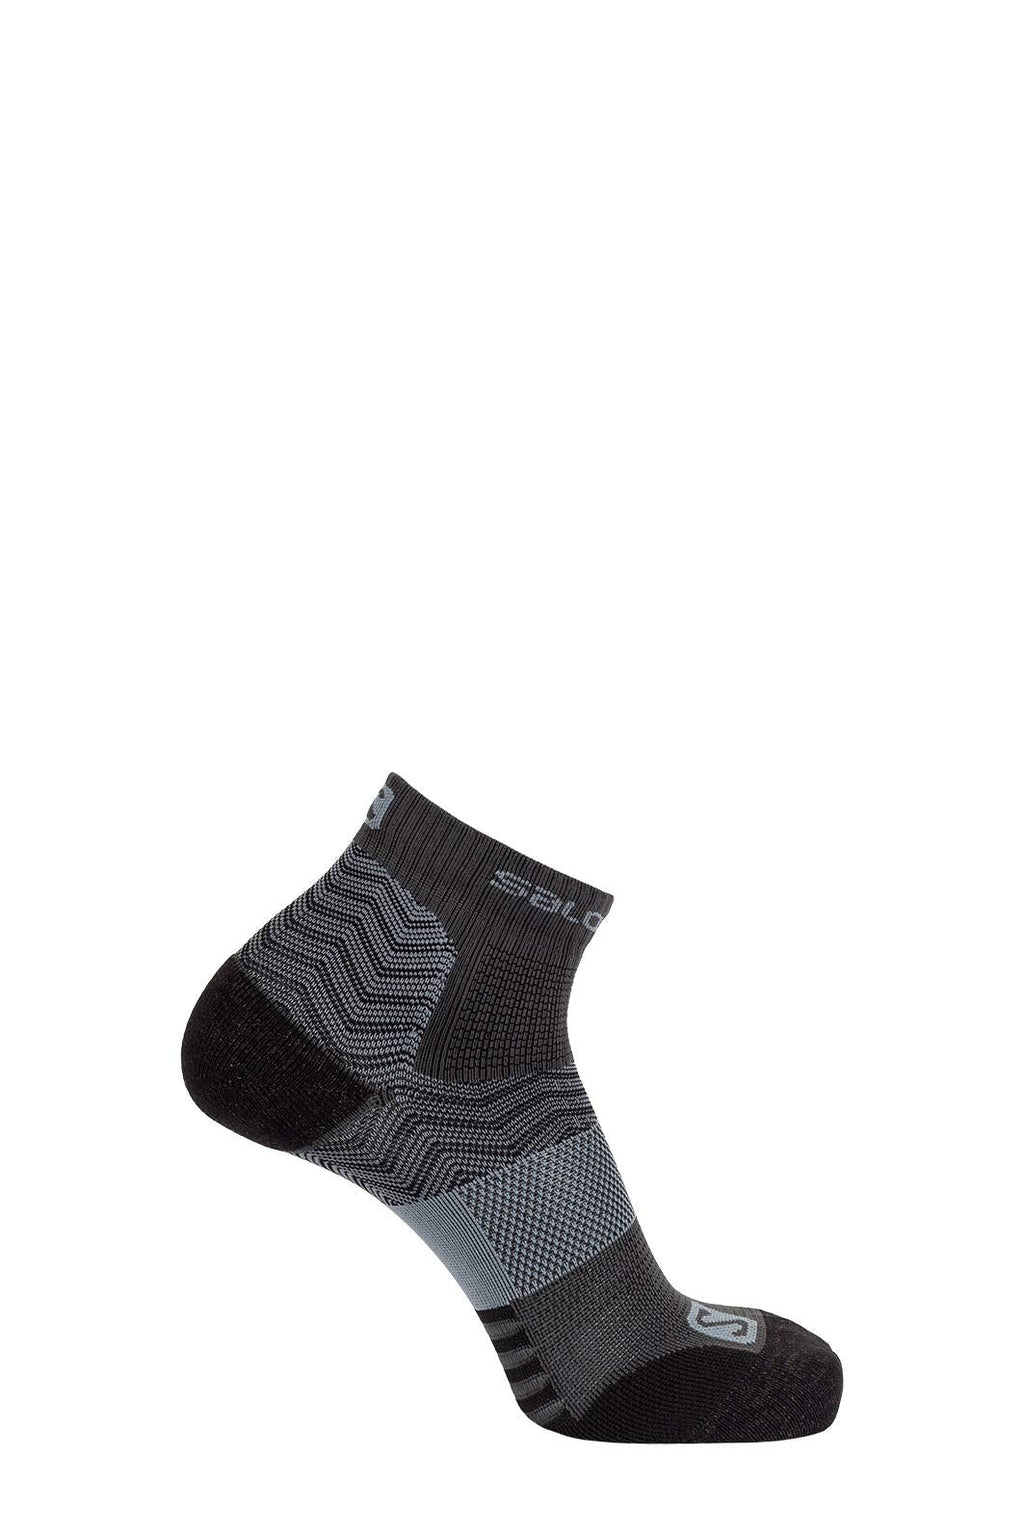 Salomon Standard Socks, Mood Indigo/Dark Denim, M Small Urban Chic/Balsam Green - BeesActive Australia